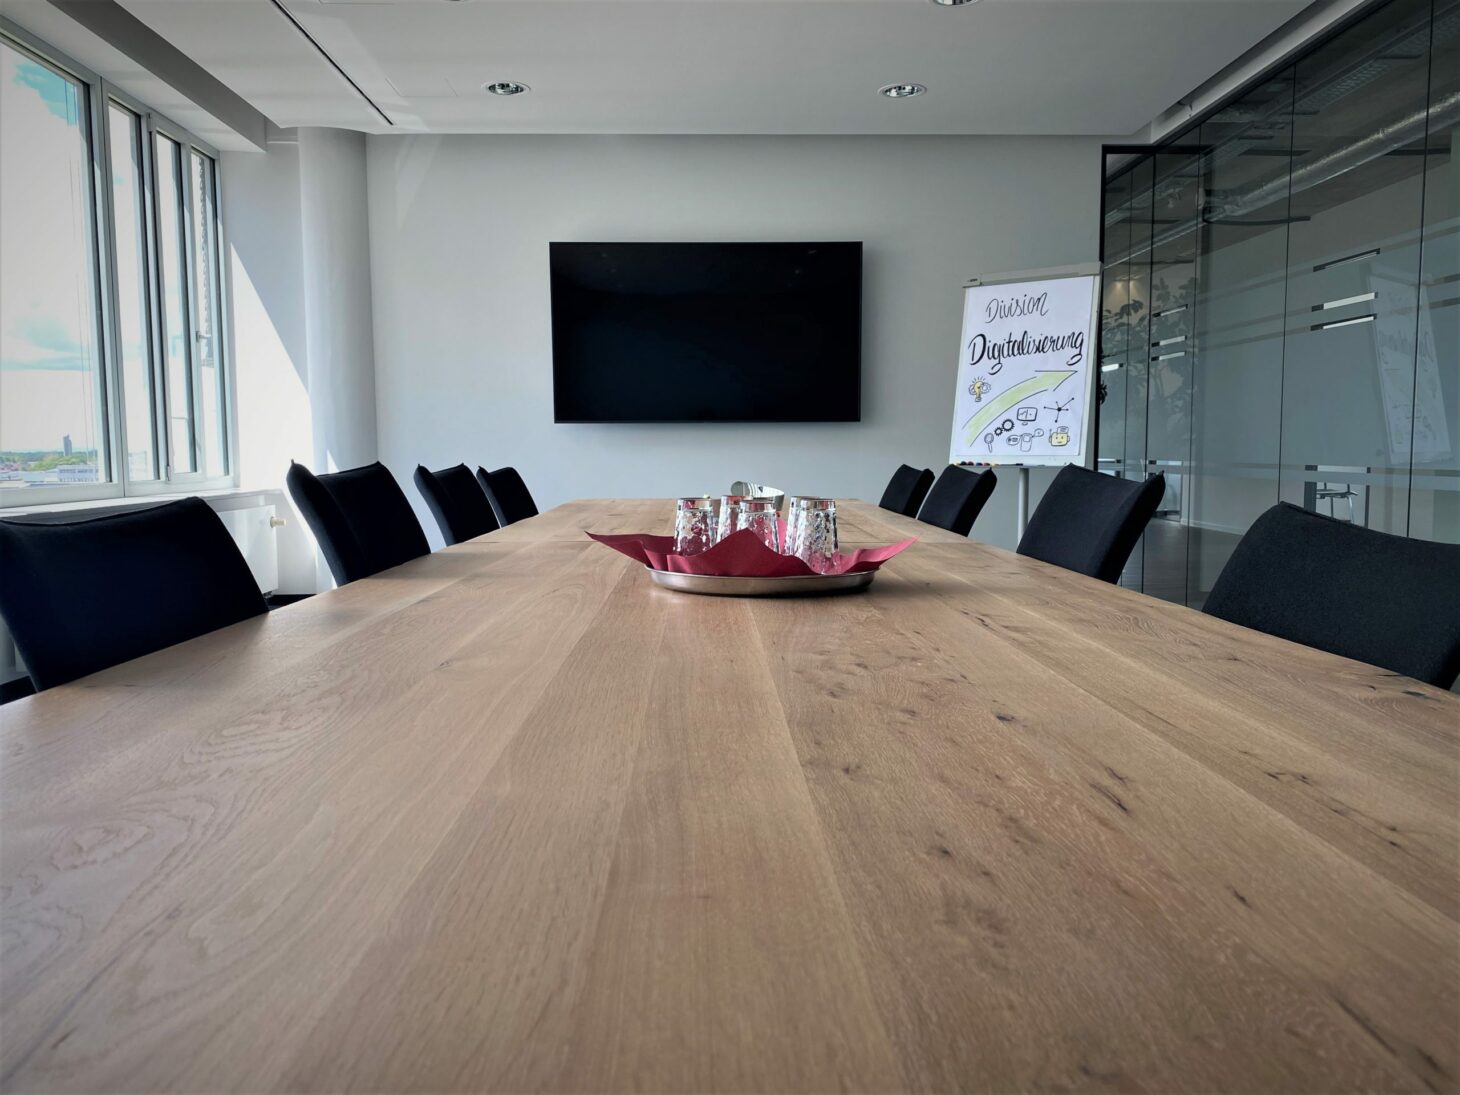 Image of the INTARGIA - a valantic company office, Meetingroom